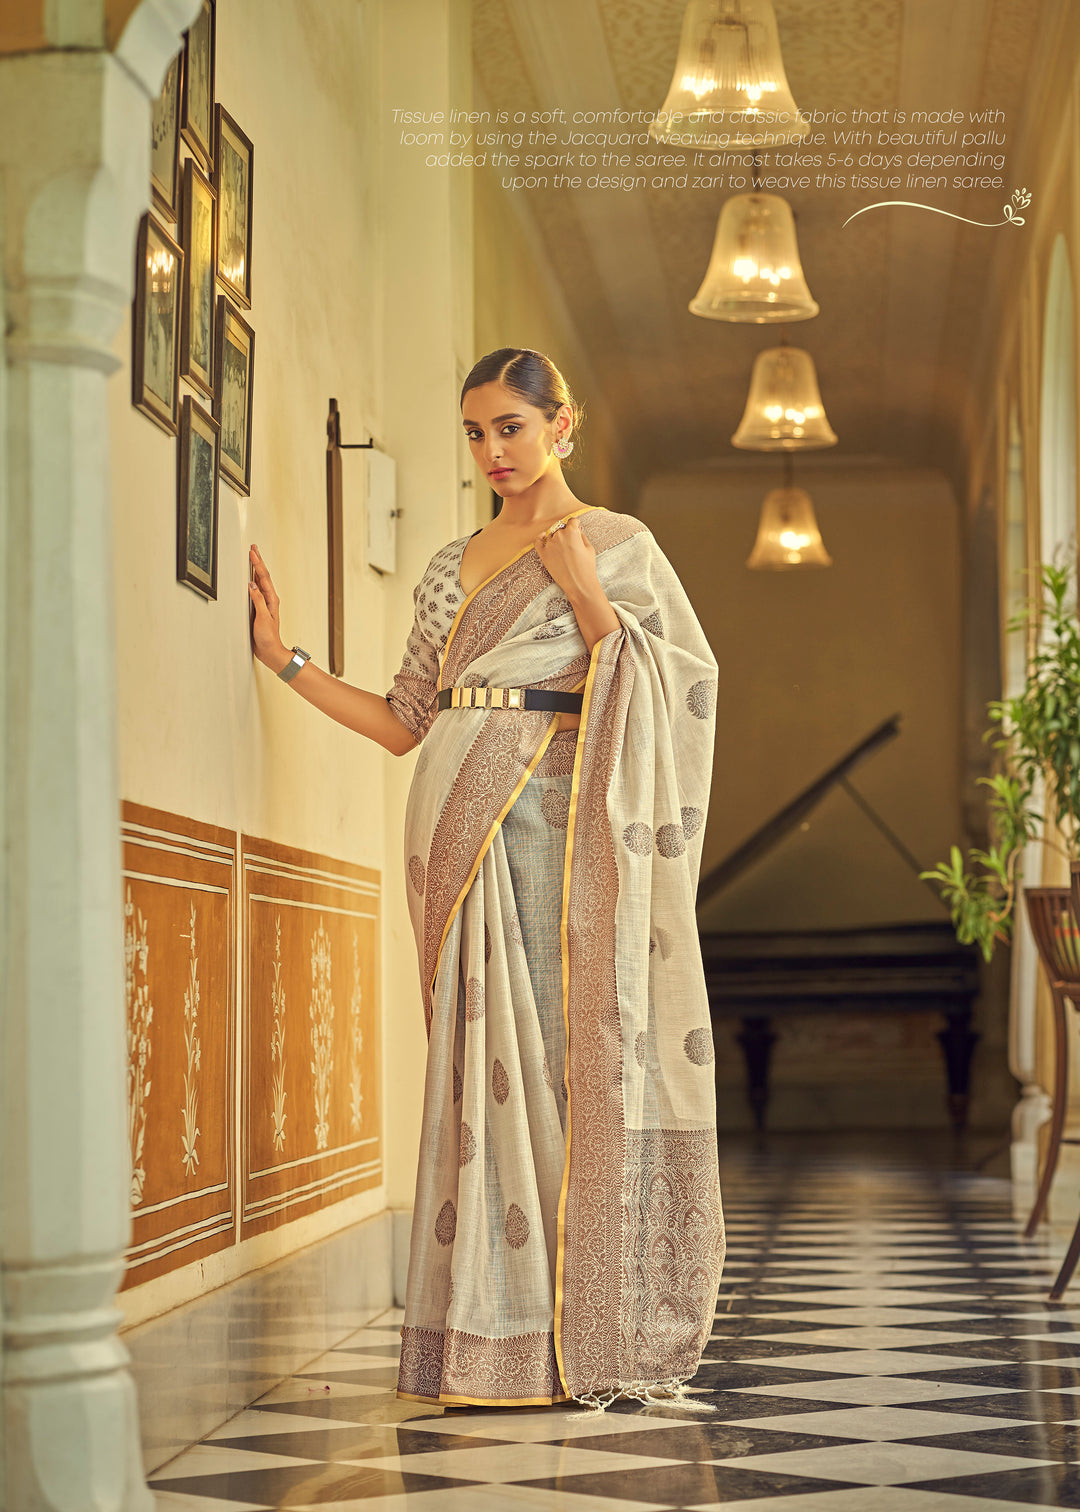 Buy Now Ravishing Beige Soft Linen Weaving Saree with Belt Online in USA, UK, Canada & Worldwide at Empress Clothing.